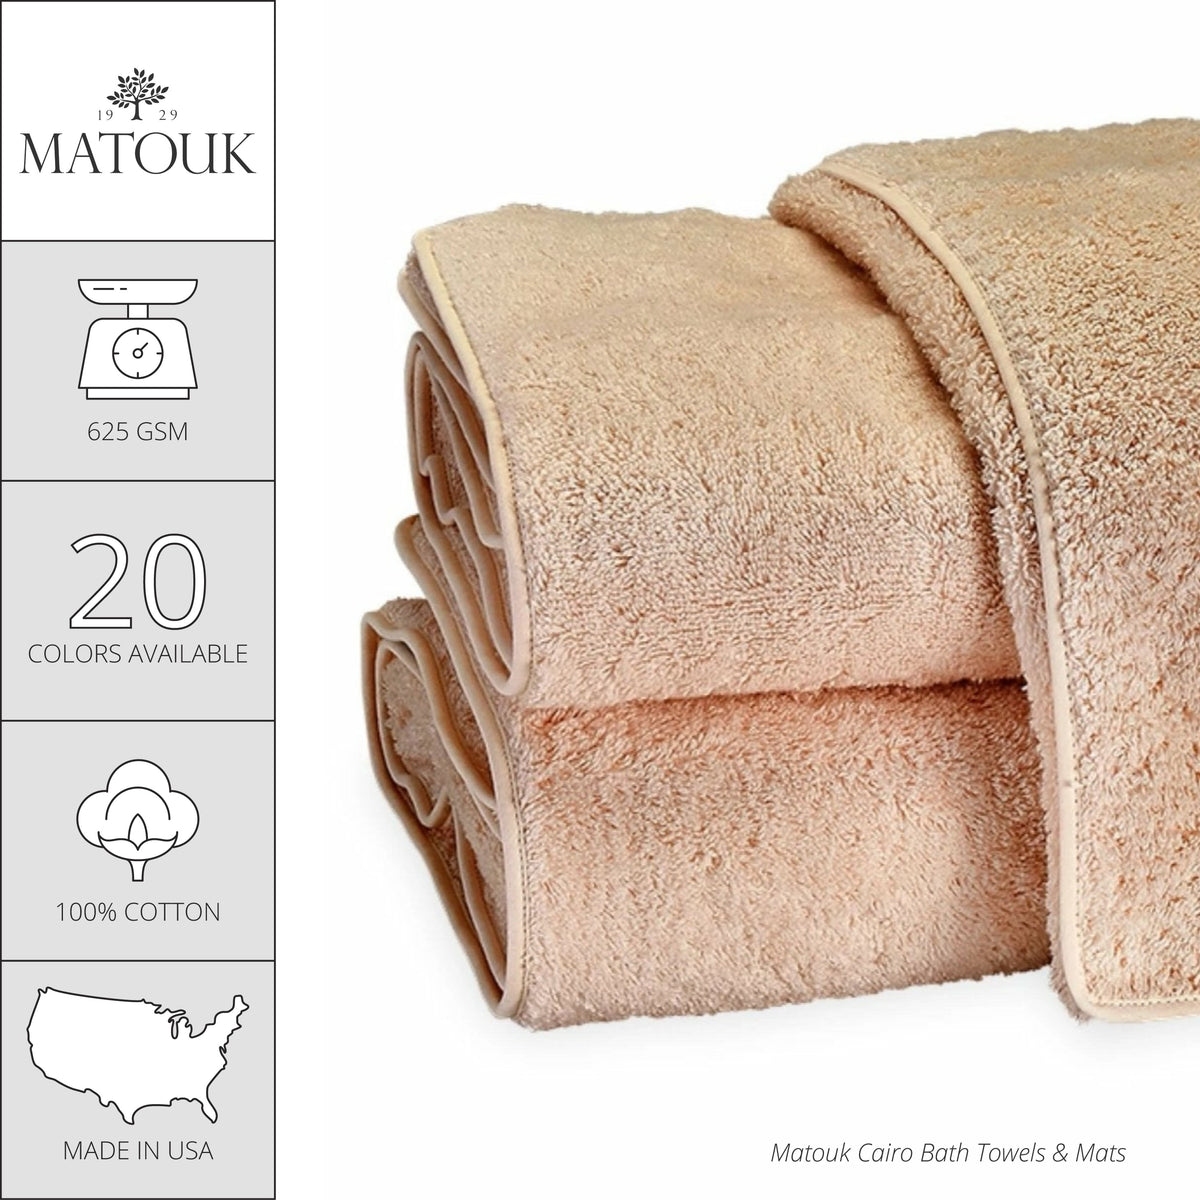 Matouk Cairo Bath Towels and Mats - White/Silver